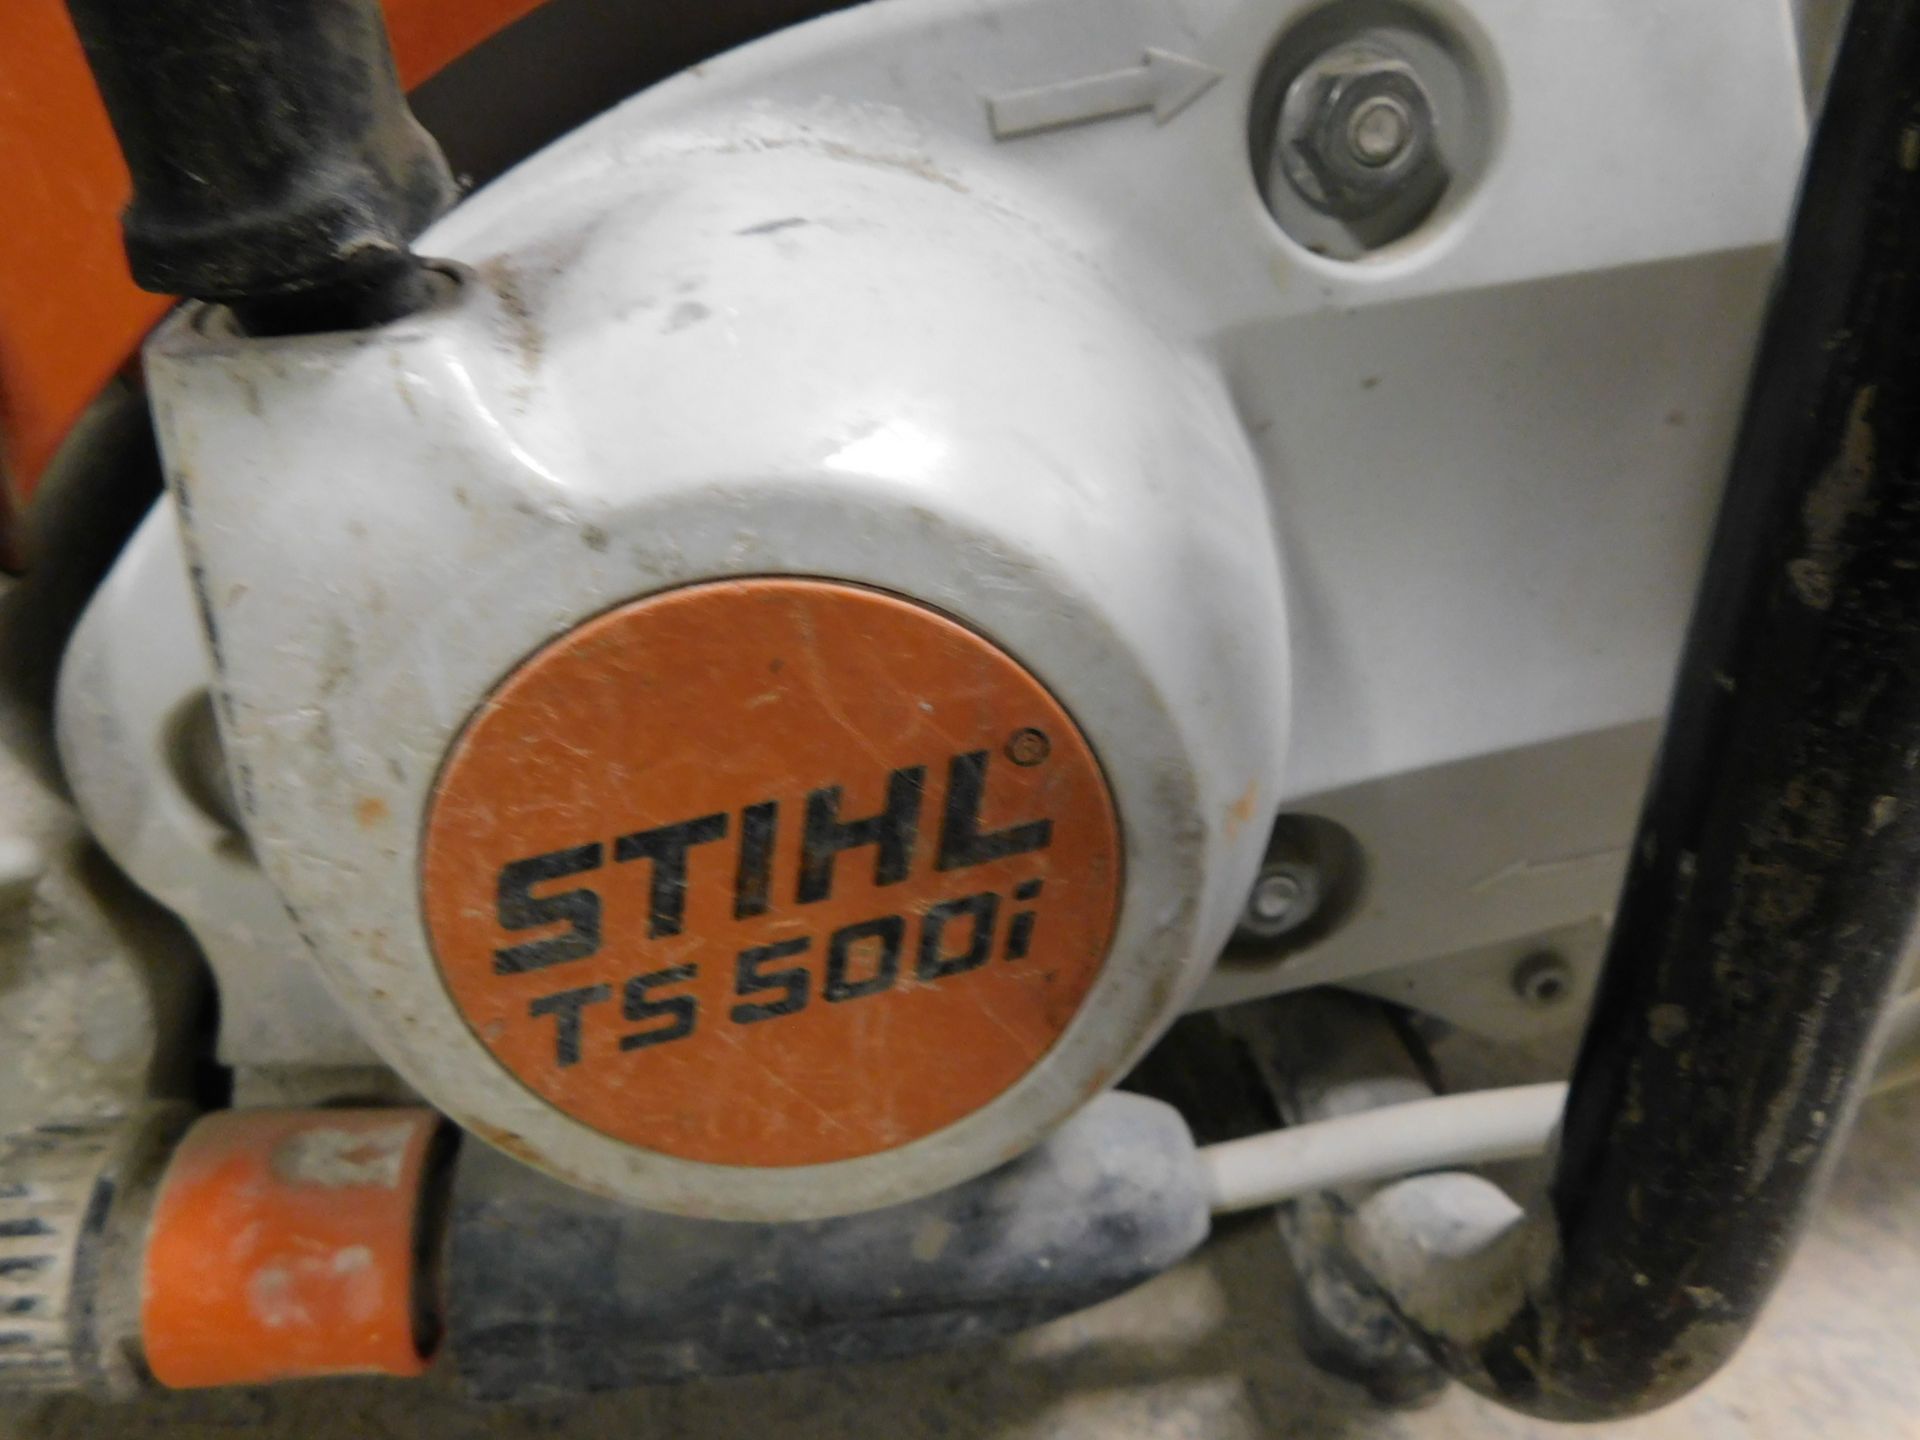 Stihl TS 500i Gas-Powered Cut-Off Saw - Image 5 of 7